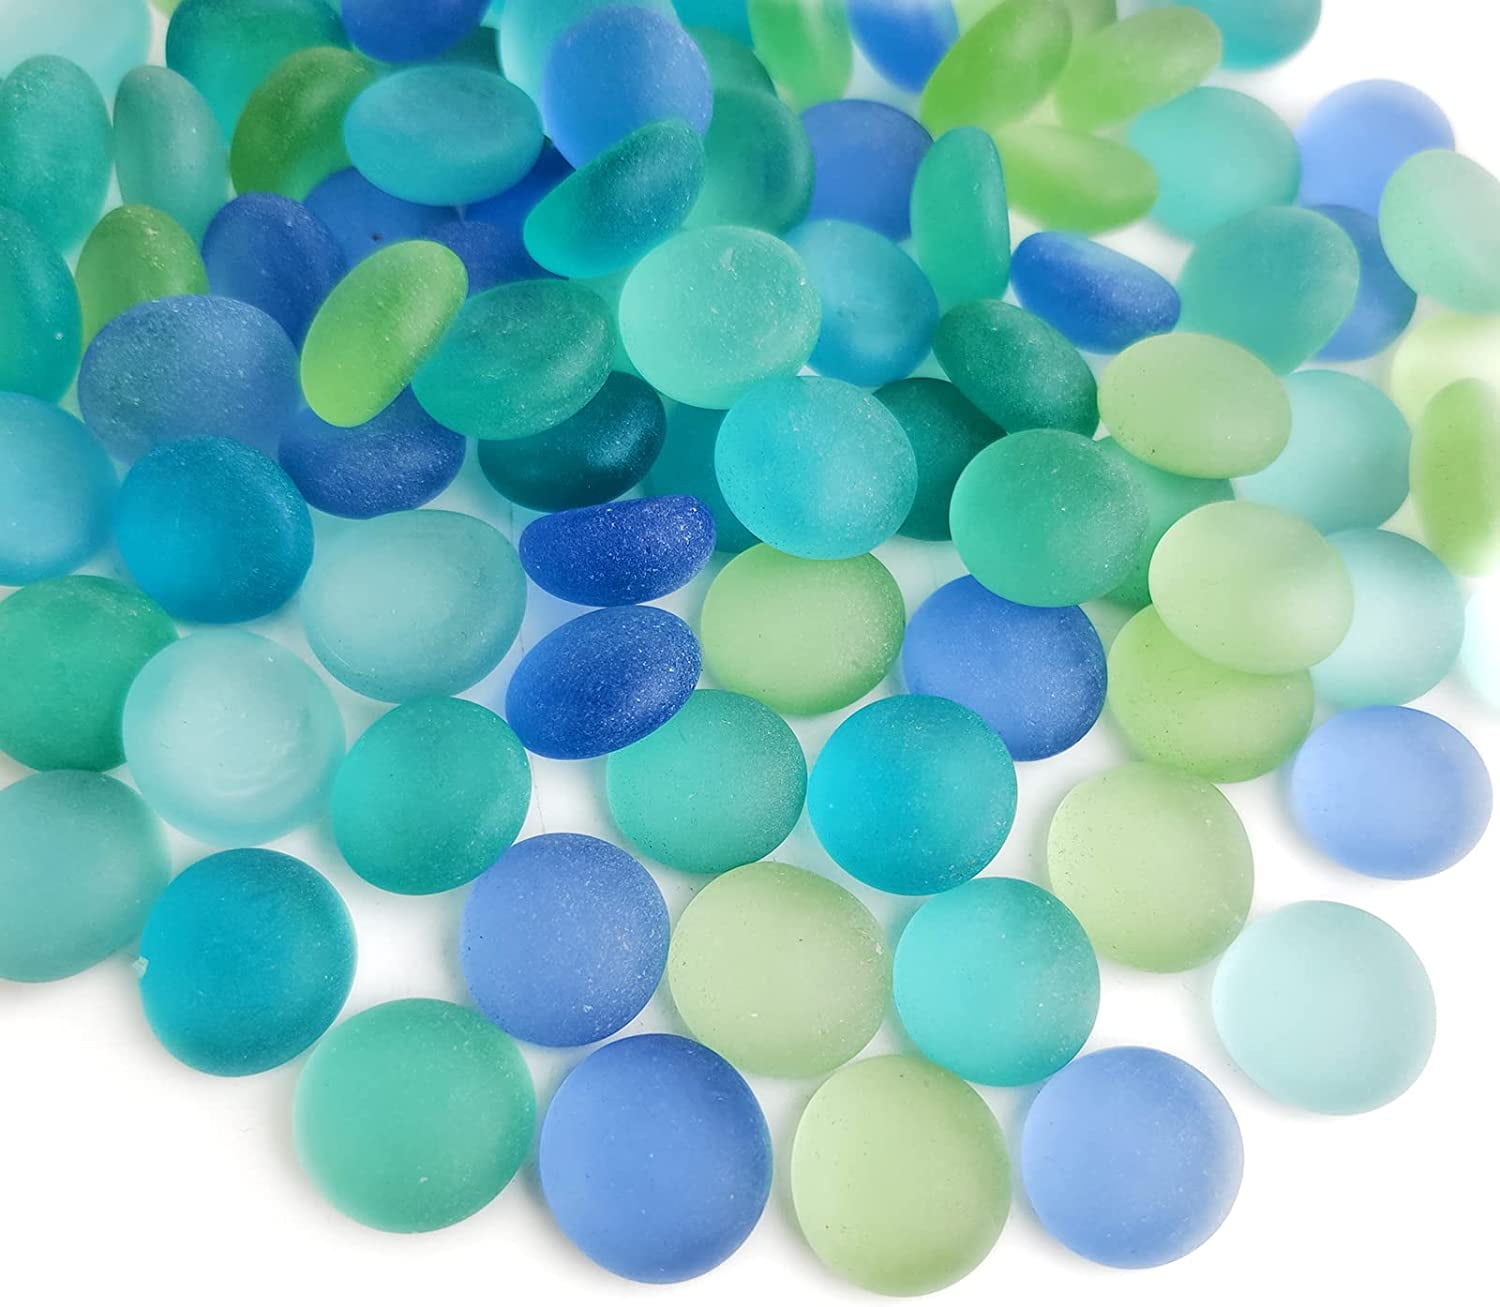 HappyFiller 90 PCS Clear Flat Marbles Glass Gems Pebbles for Vase  Fillers,Crafts,Table Scatter,Candle Holder Decor,Aquarium Fish Tank  Pebbles,1 LB